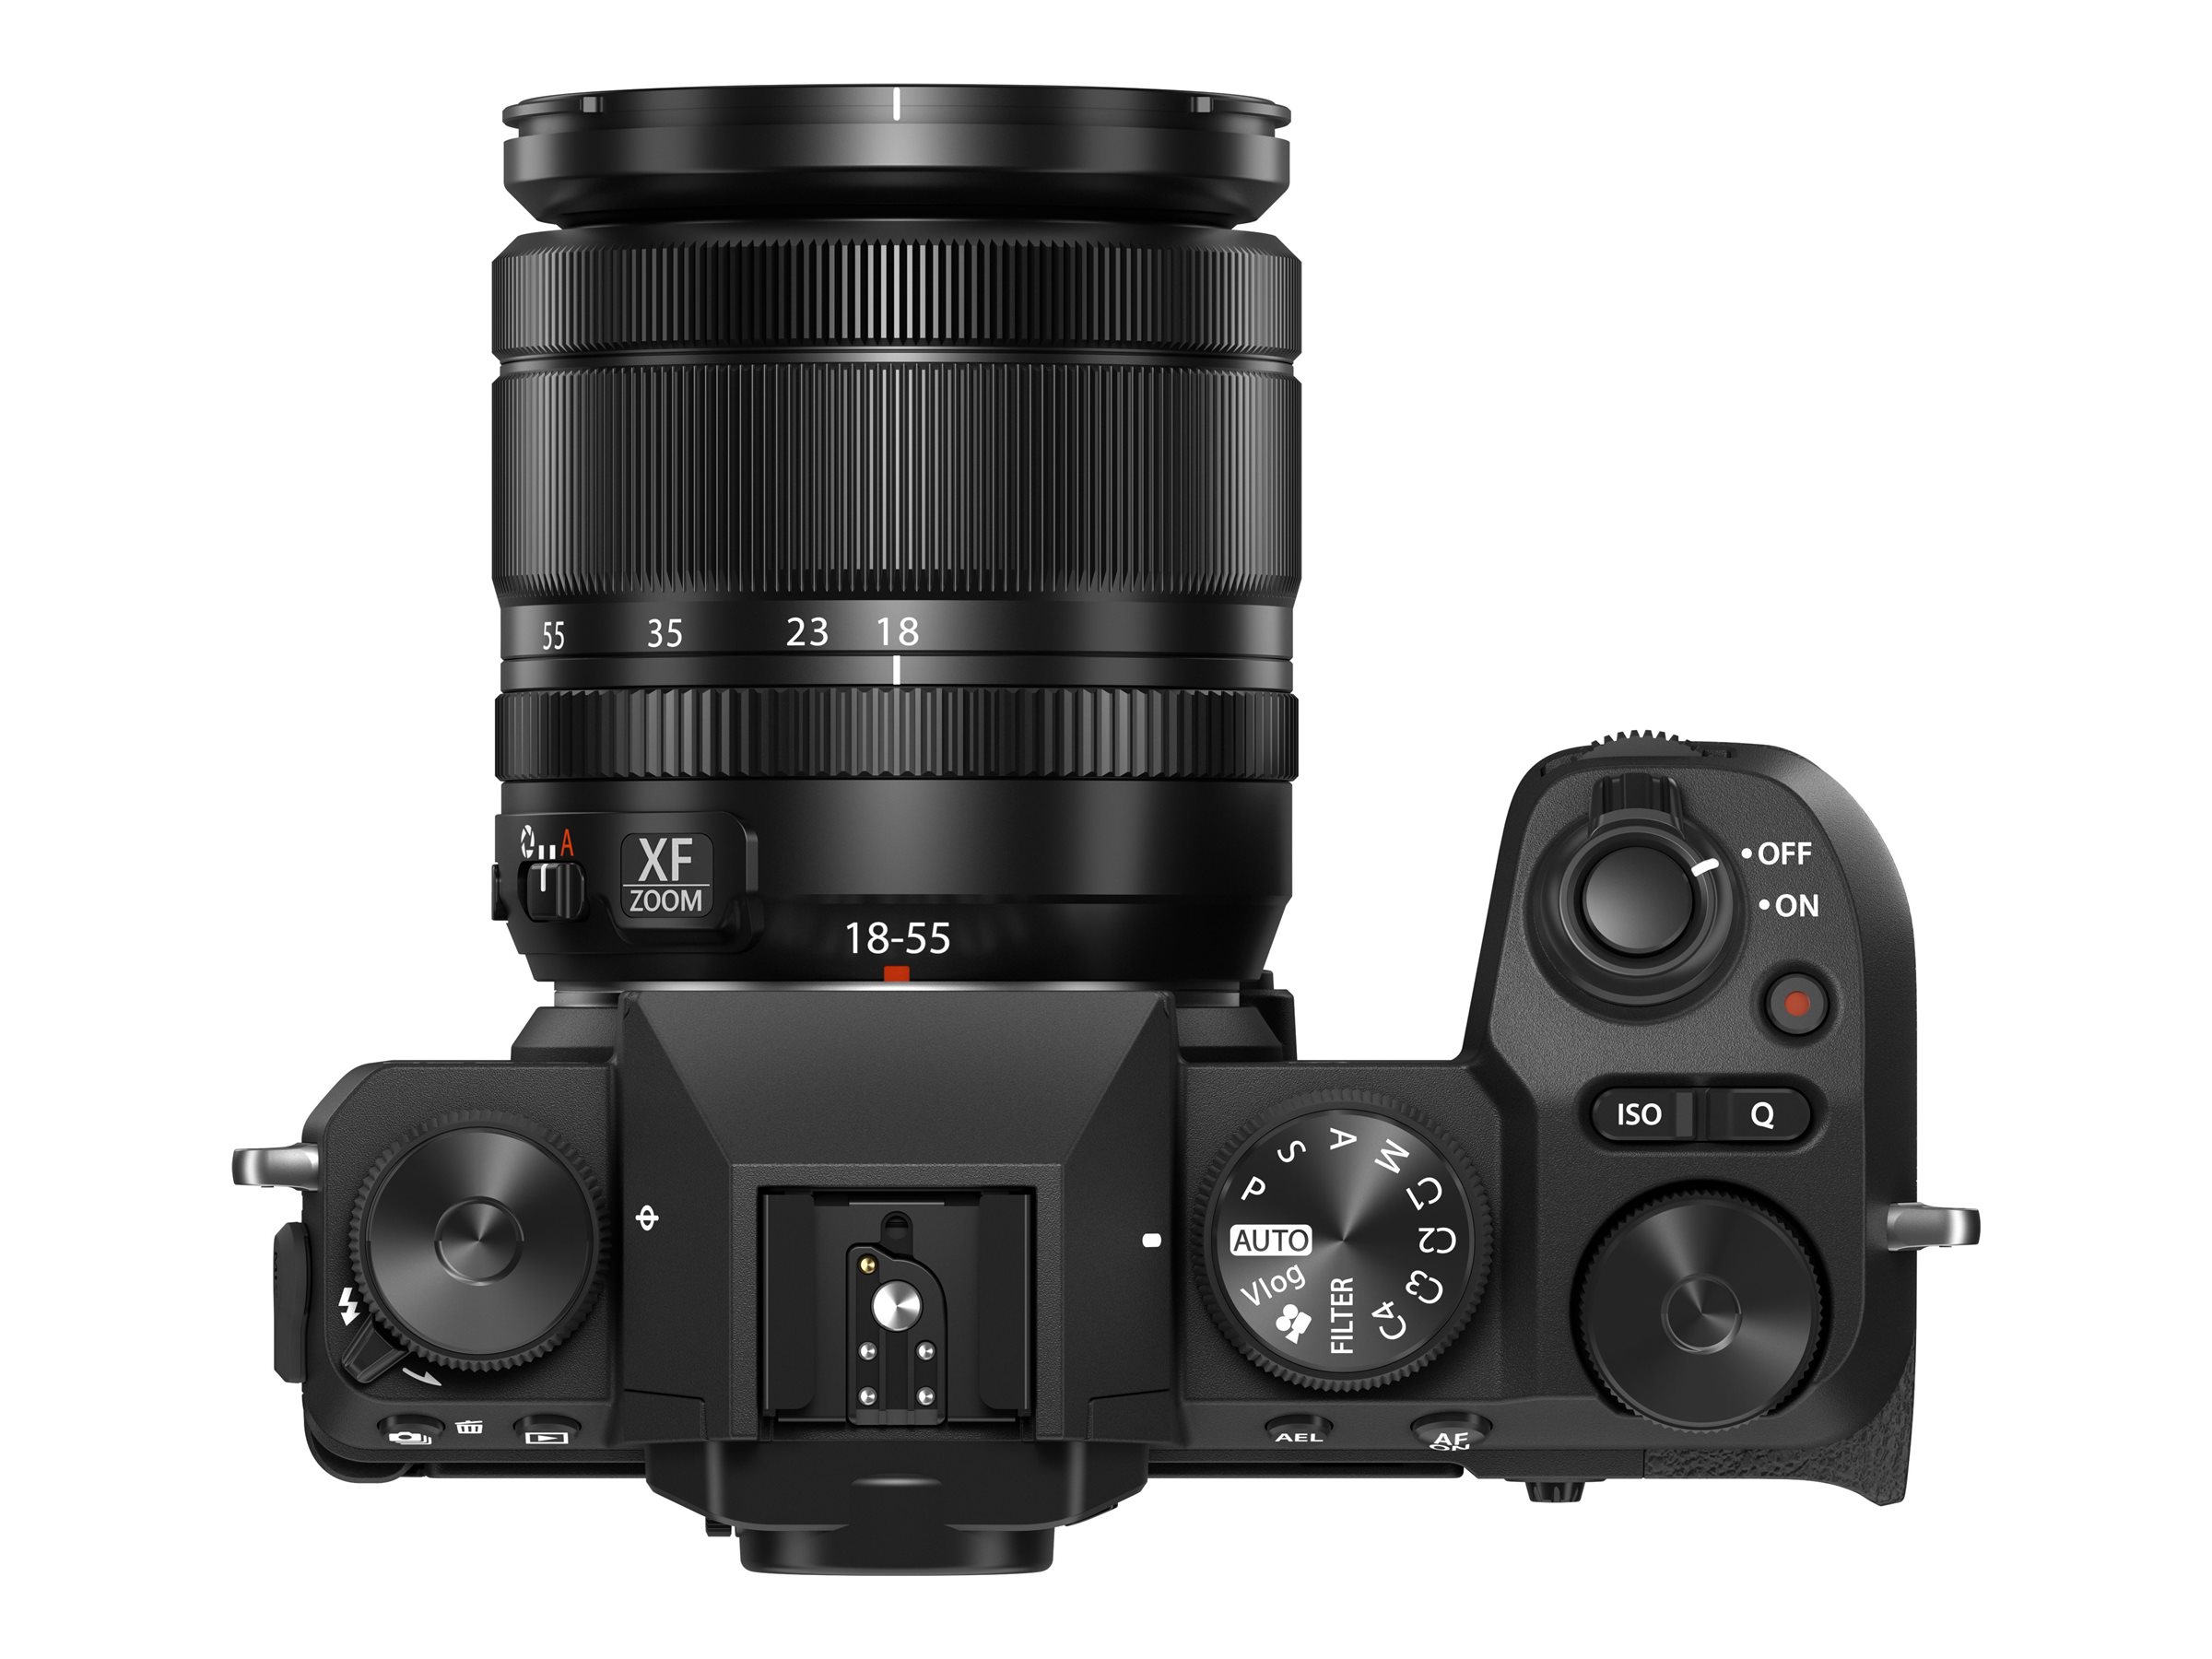 Fujifilm X Series X-S20 Mirrorless Digital Camera with Fujinon XF 18-55mm  F/2.8-4.0 R LM OIS Lens - 600023519